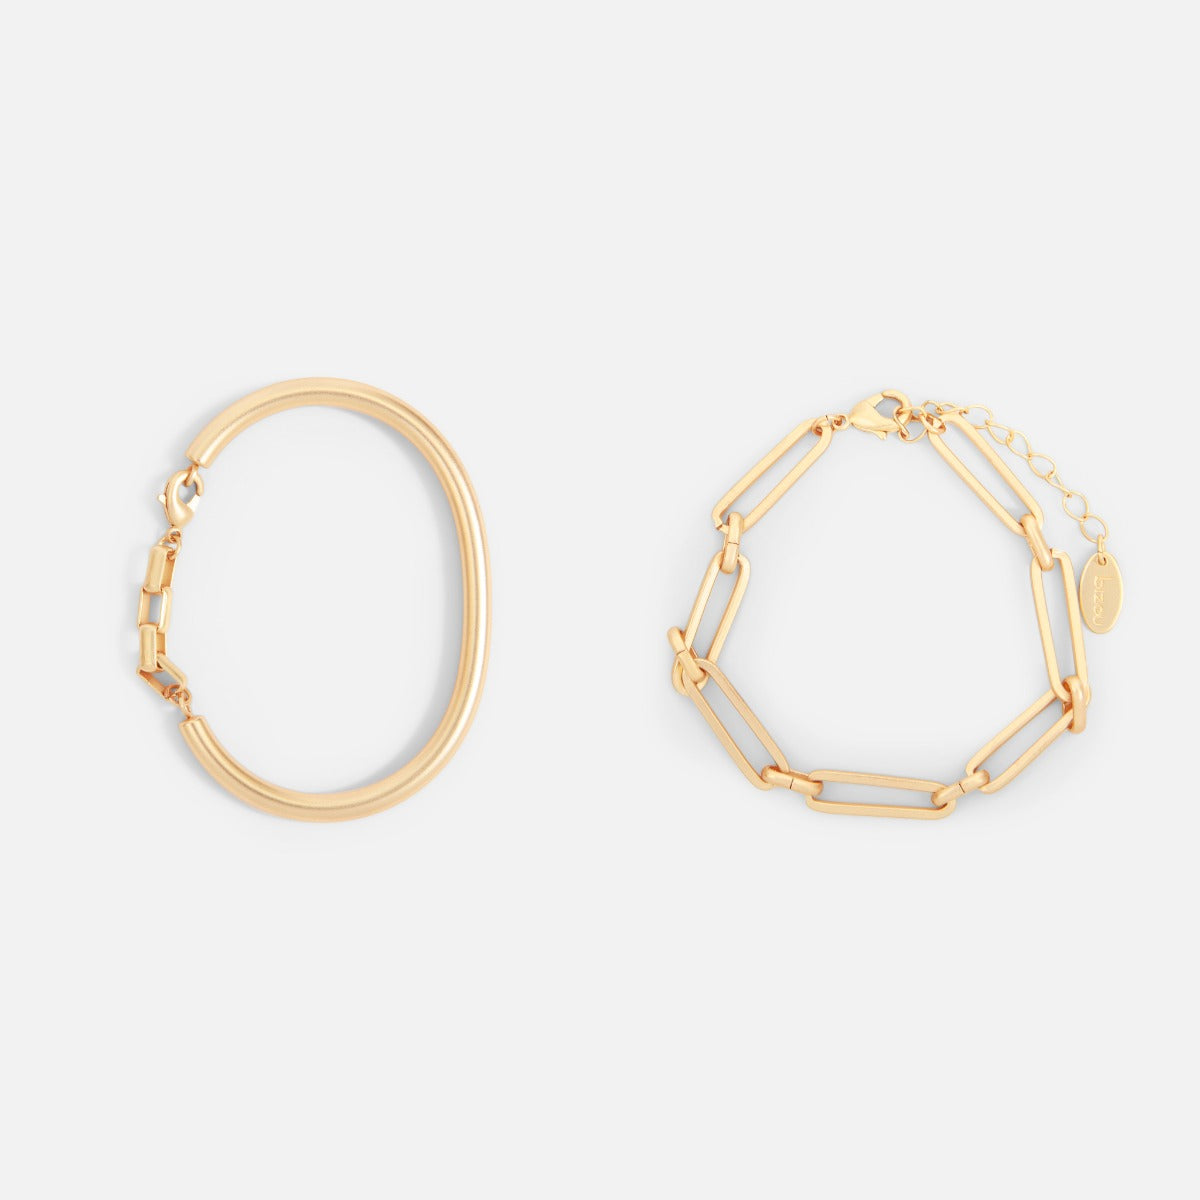 Set of two golden chain bracelets